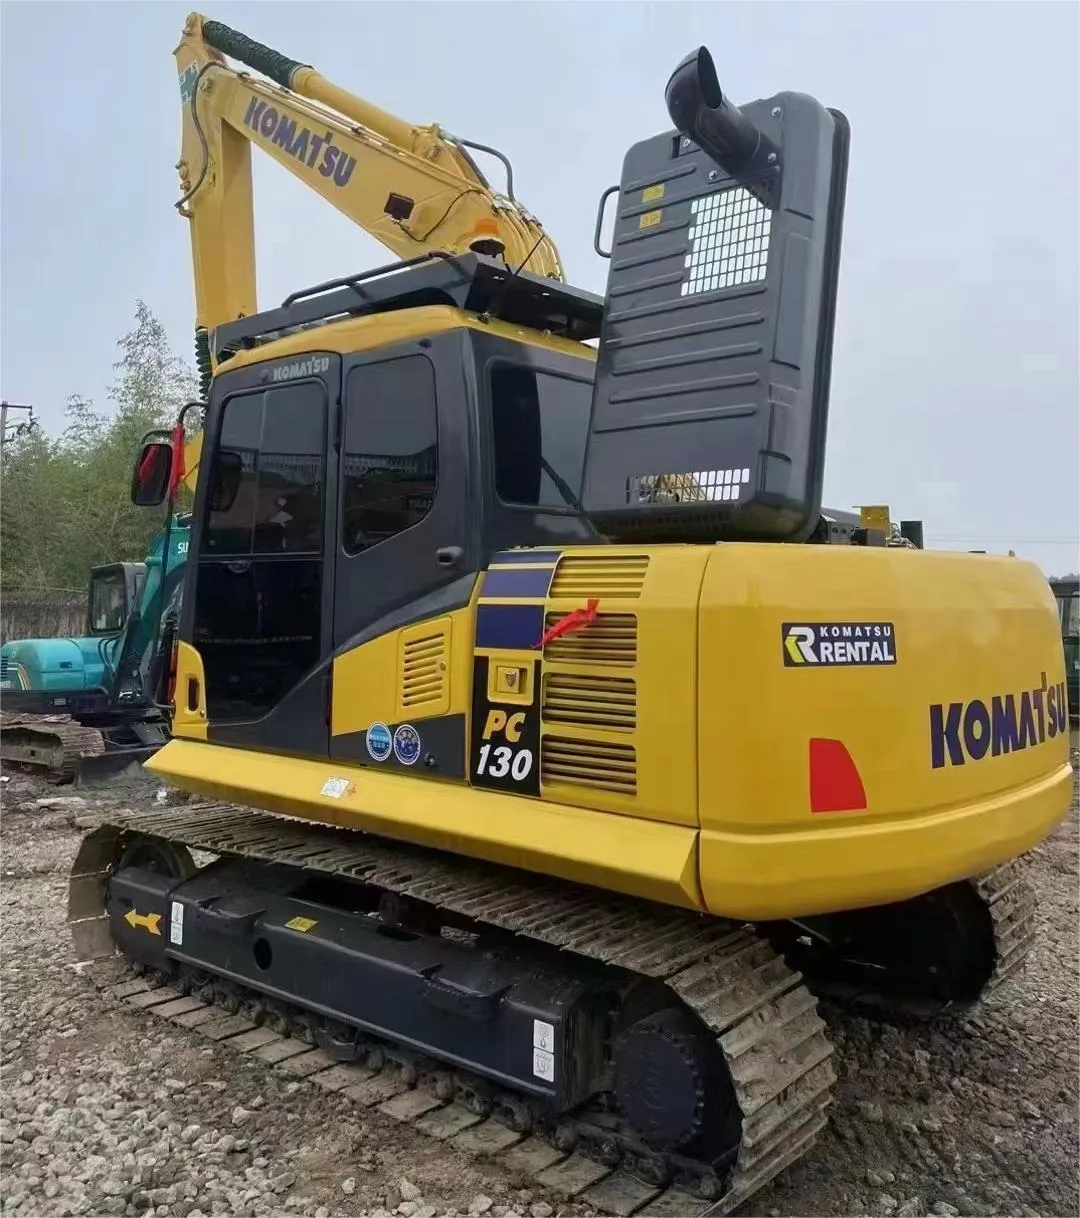 Used Komatsu PC300 excavator at a low price, available PC200-7 PC220 PC210 PC240 PC360 excavator, global direct shipping